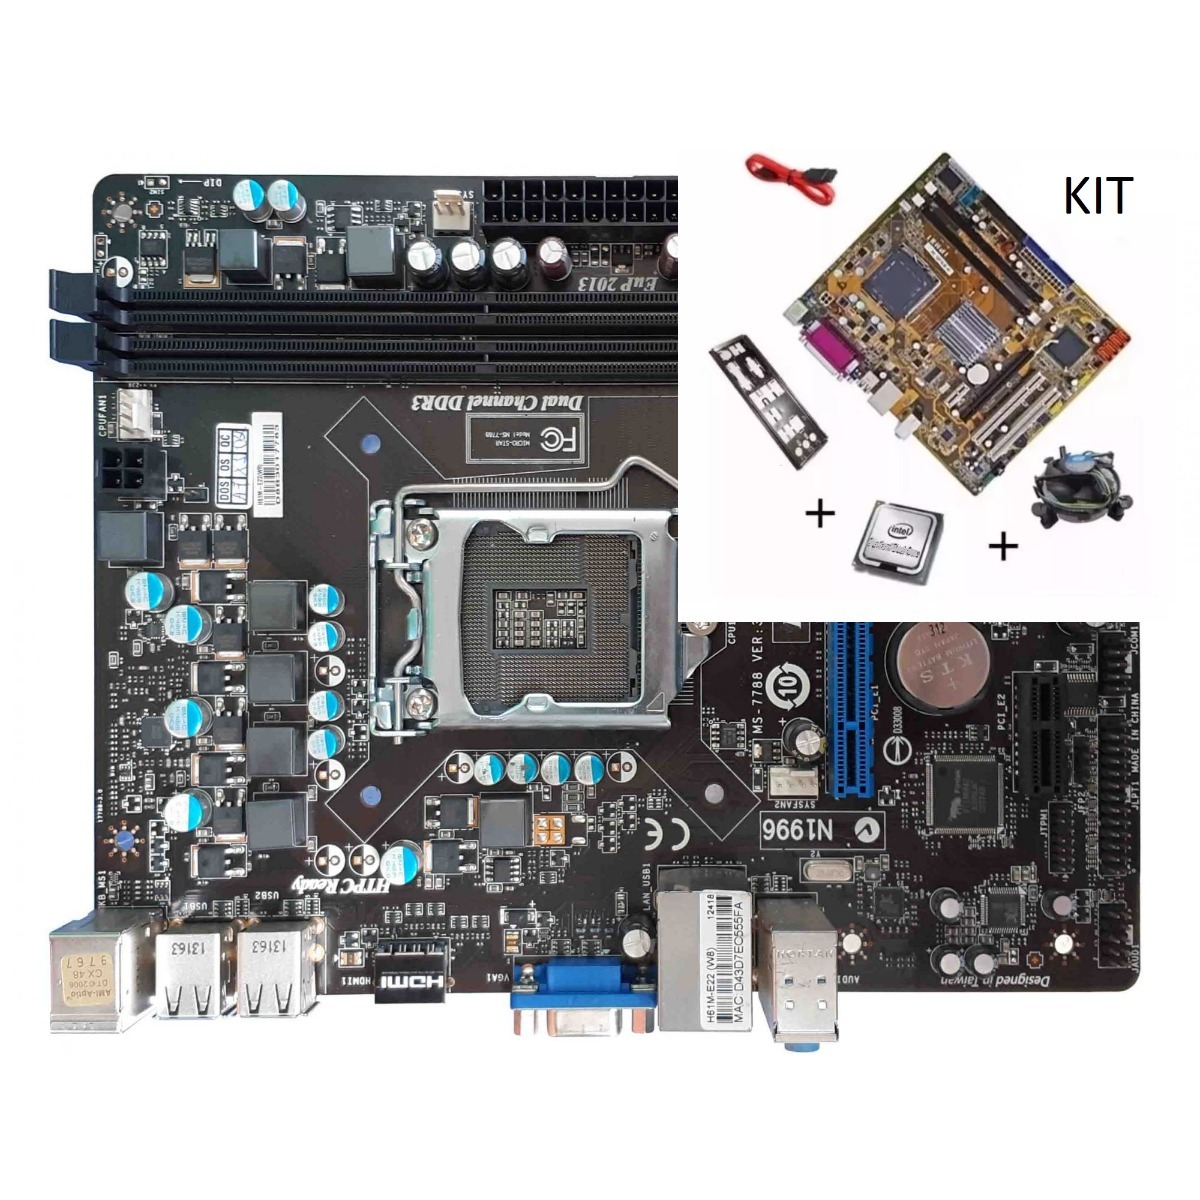 Kit Intel Lga 1156 + Intel I3 + Mem 4 Gb Ddr3 + Cooler ...